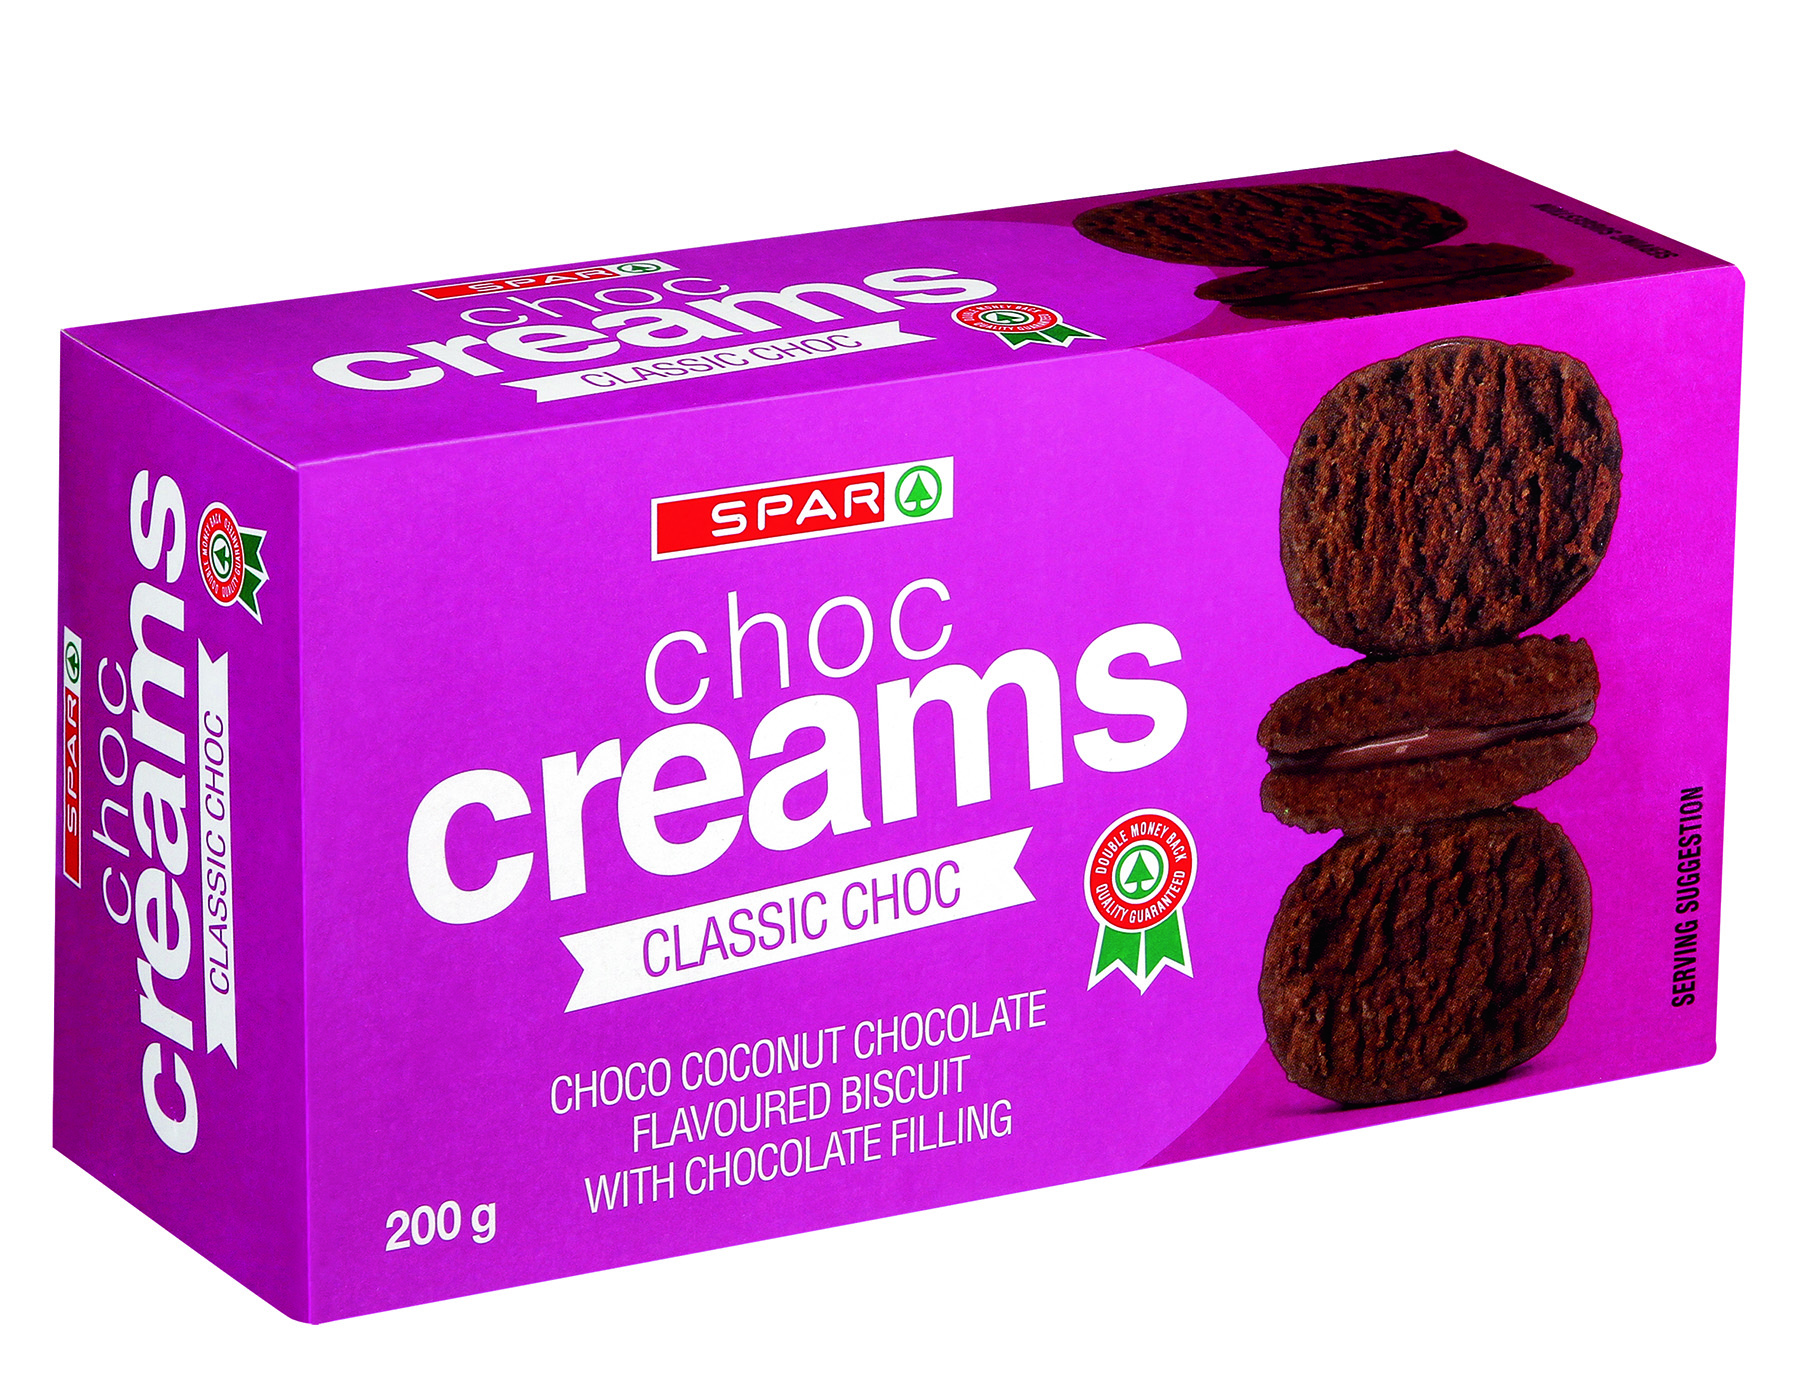 choc creams classic choc